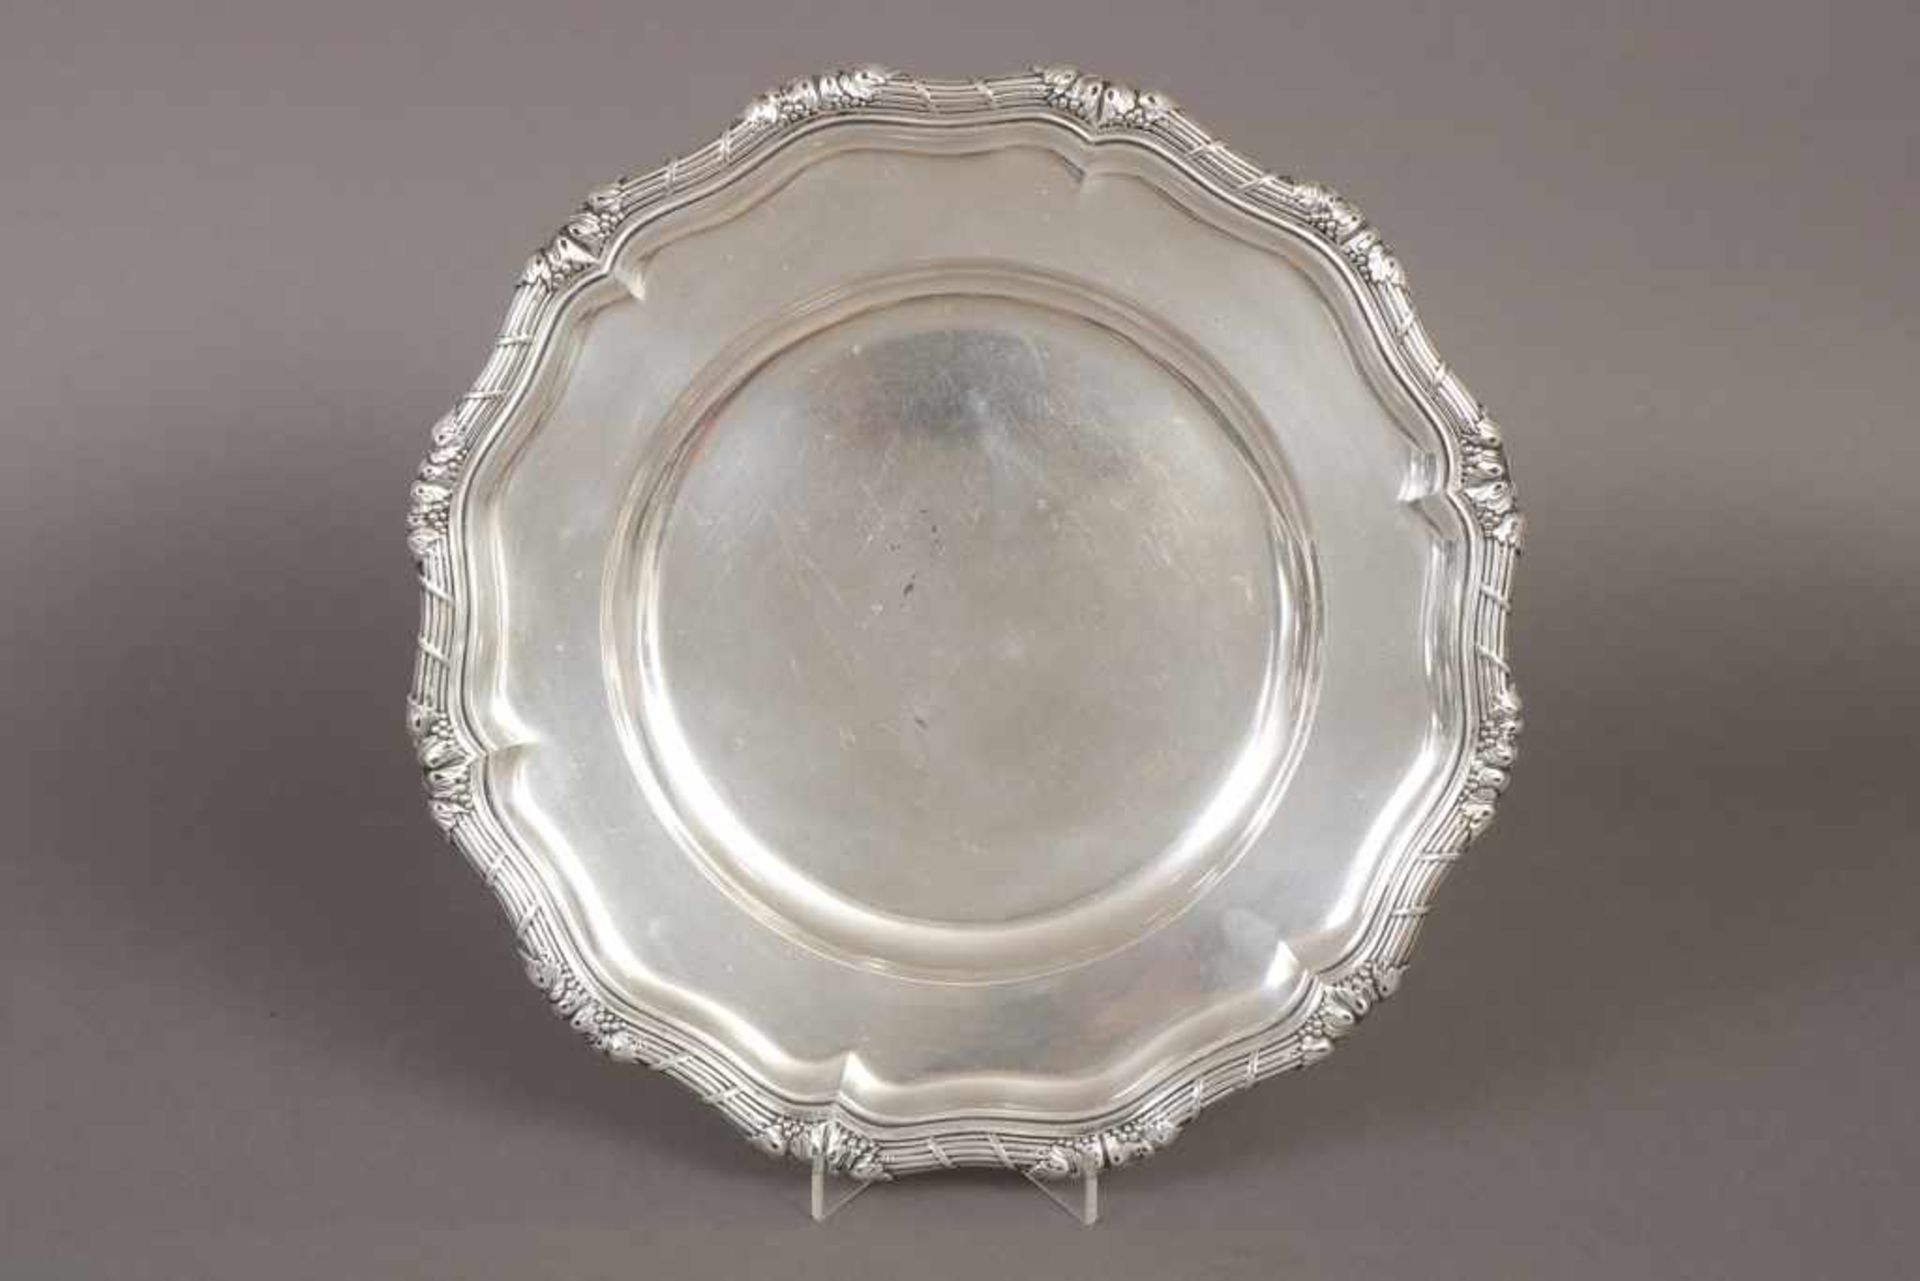 Silber-Teller 800er Silber, Wilkens, um 1920, runder, gemuldeter Teller mit passigem Rand,